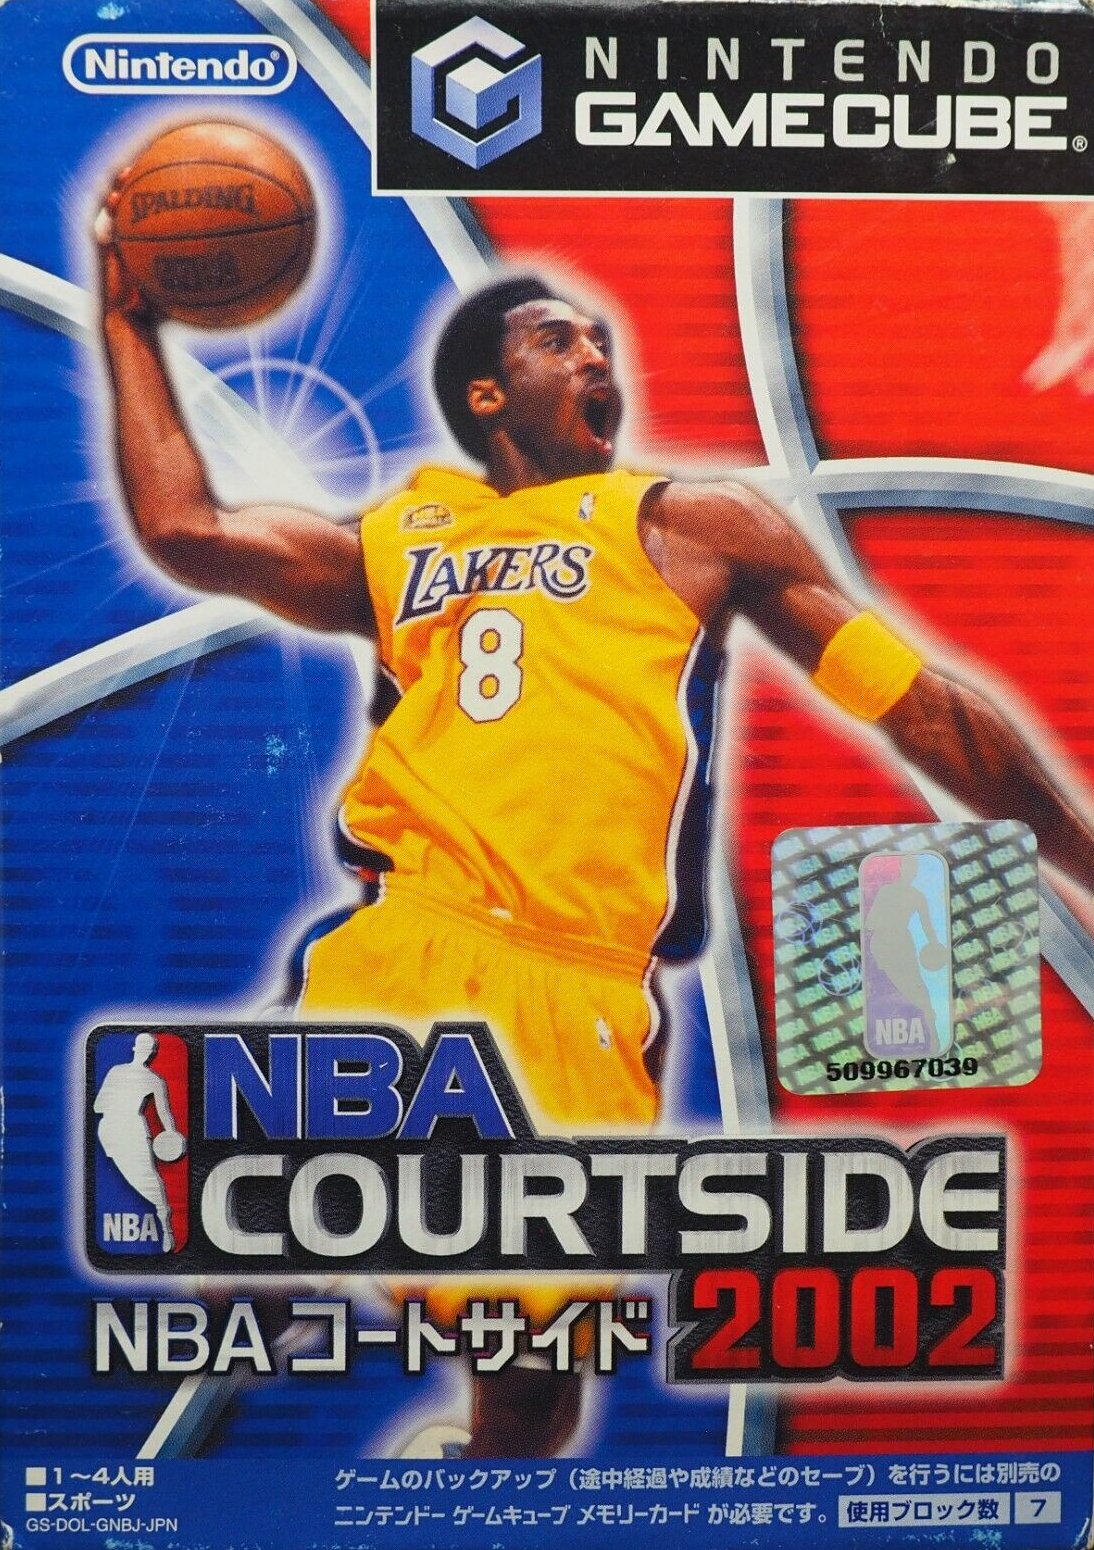 Game | Nintendo GameCube | NBA Courtside 2002 Japanese NTSC-J